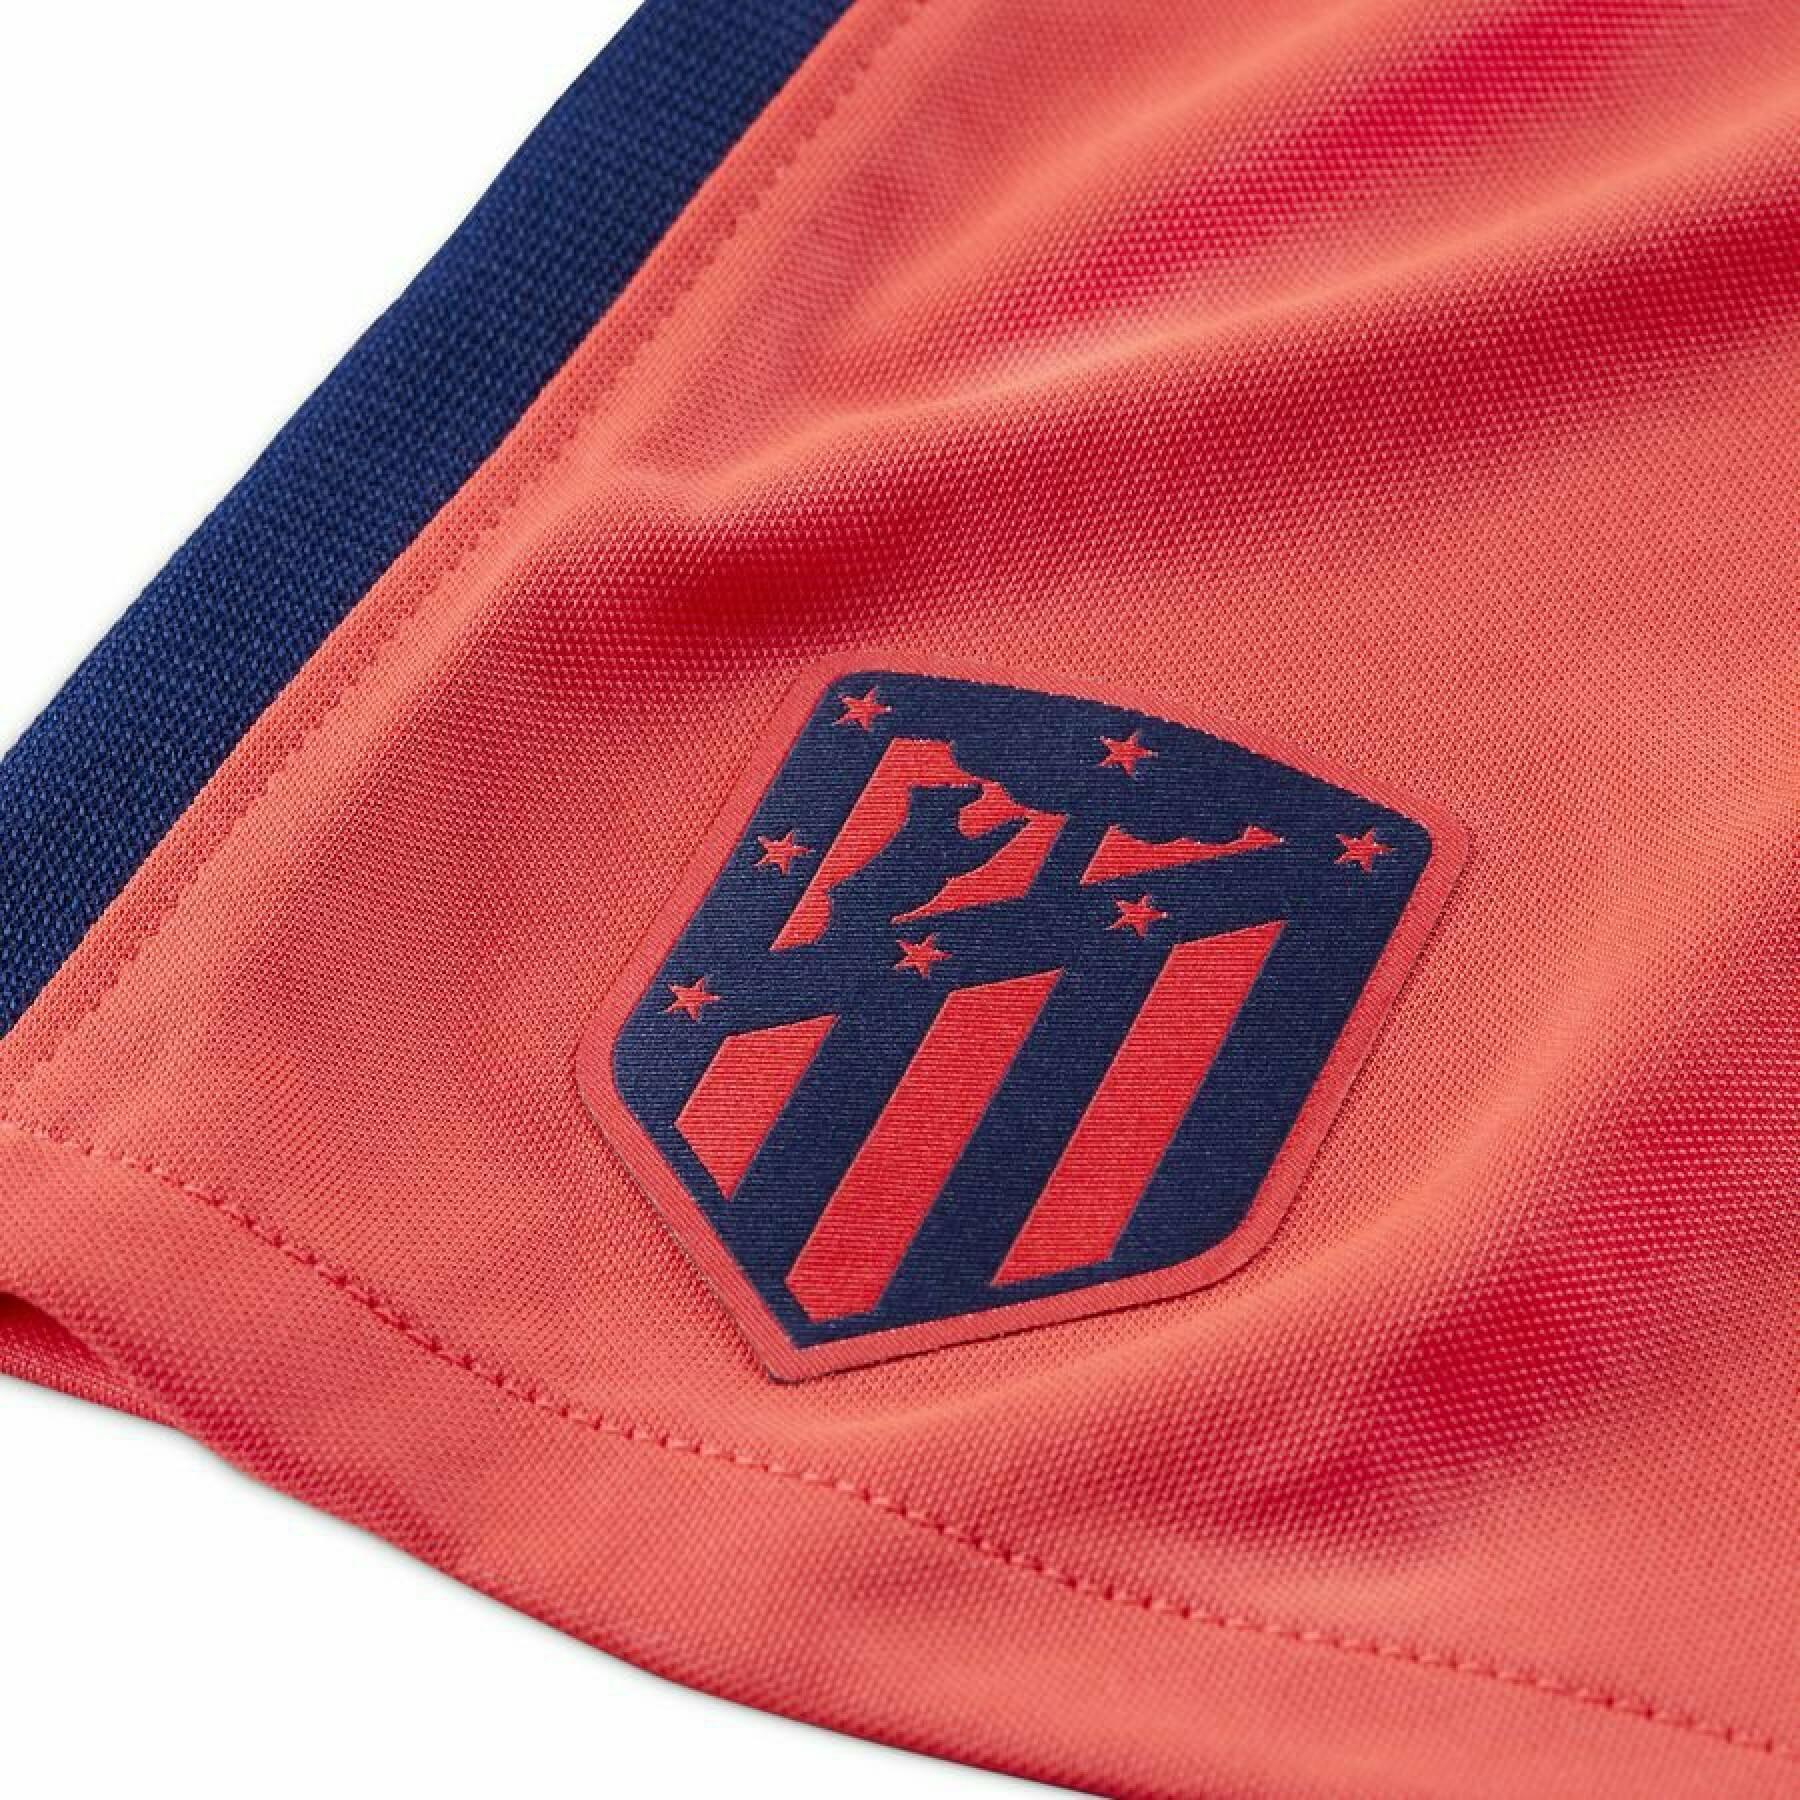 Mini kit all'aperto per bambini Atlético Madrid 2021/22